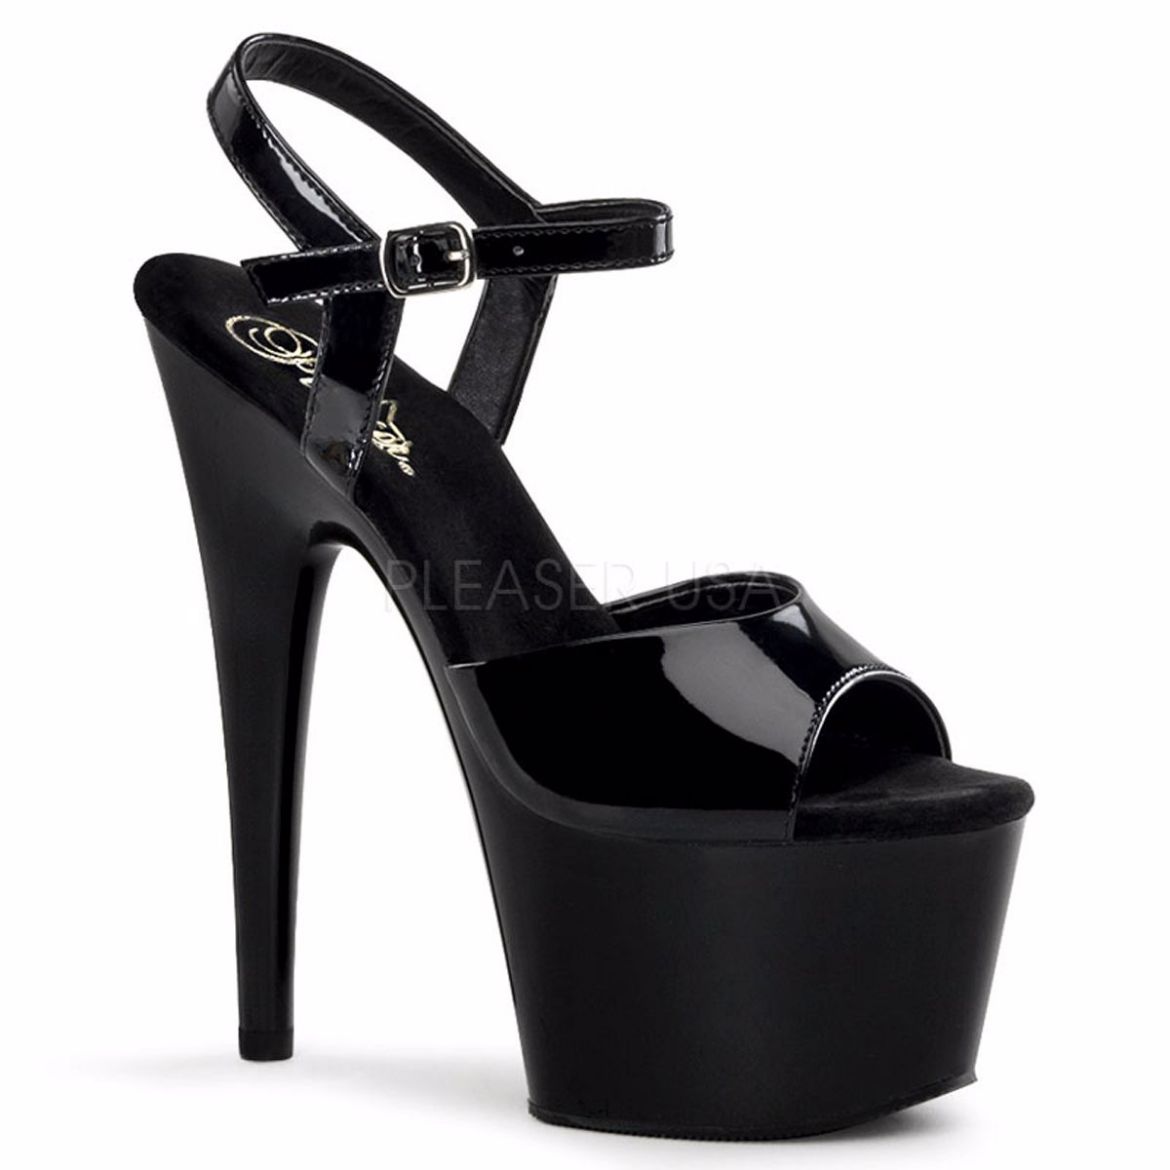 Product image of Pleaser Adore-709 Black Patent/Black, 7 inch (17.8 cm) Heel, 2 3/4 inch (7 cm) Platform Sandal Shoes